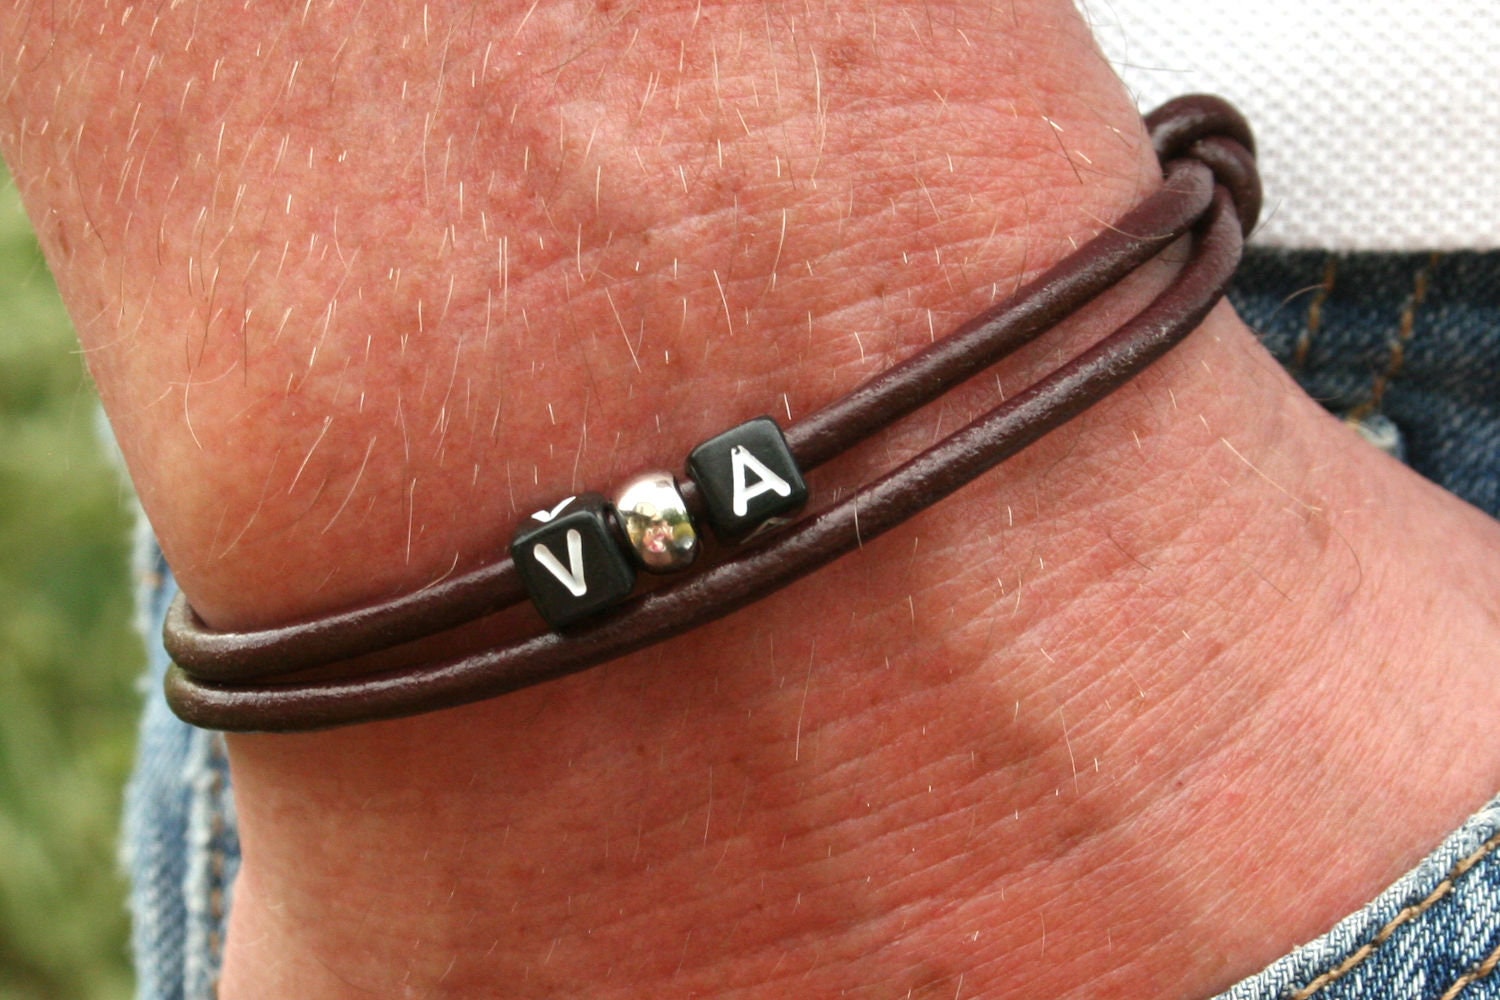 Bracelet Personalized Letters Friendship Bracelet Letters Partner